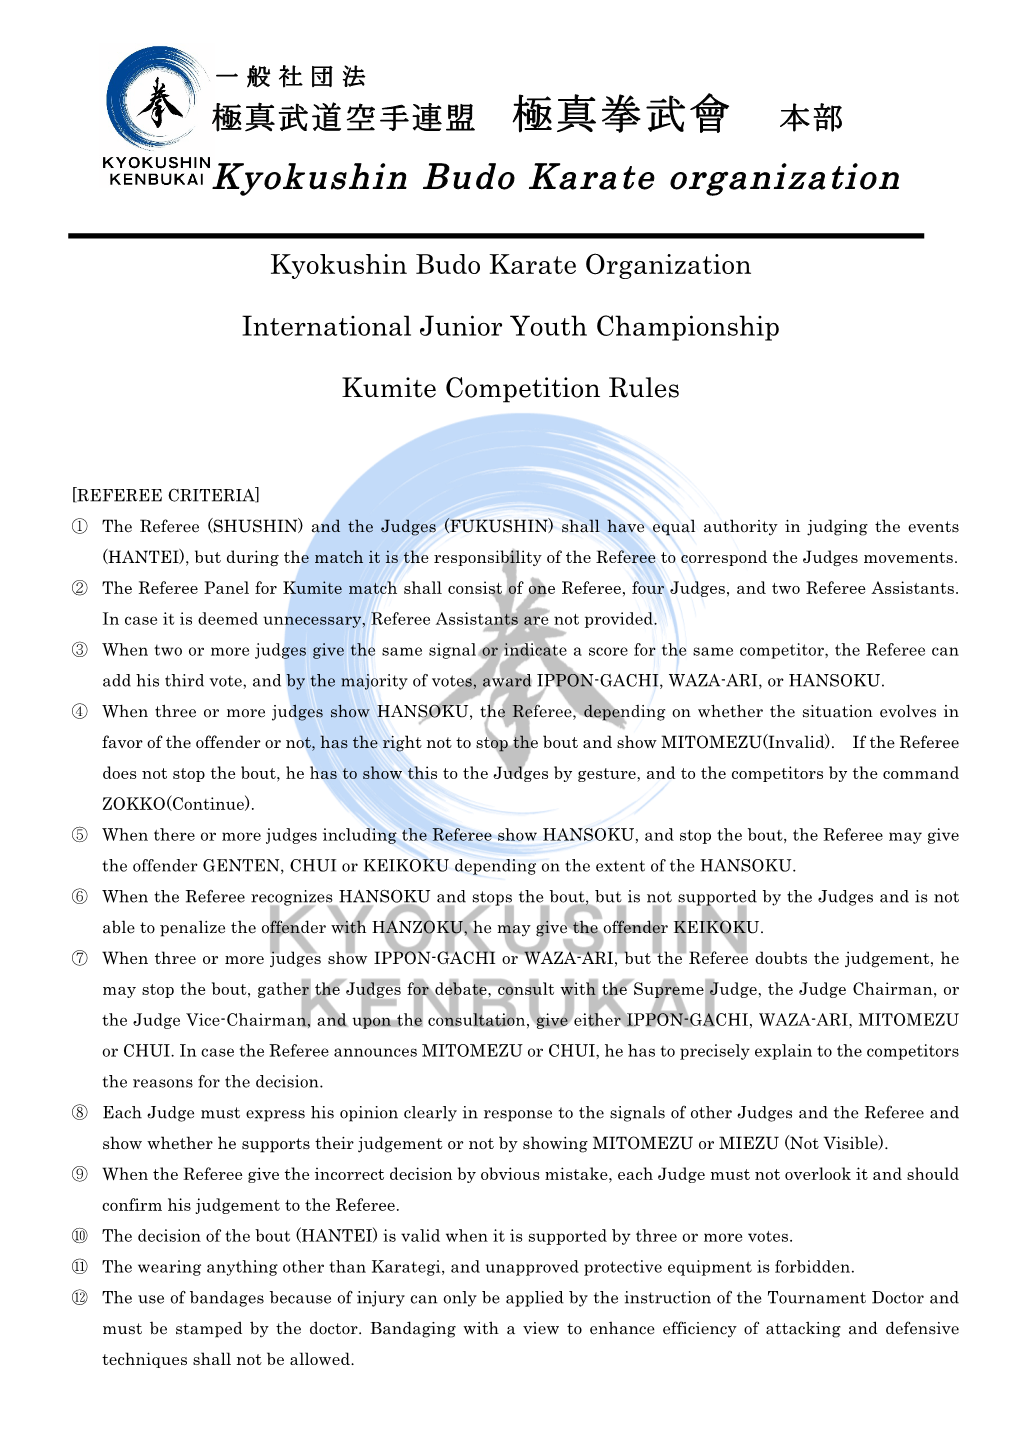 Kyokushin Budo Karate Organization